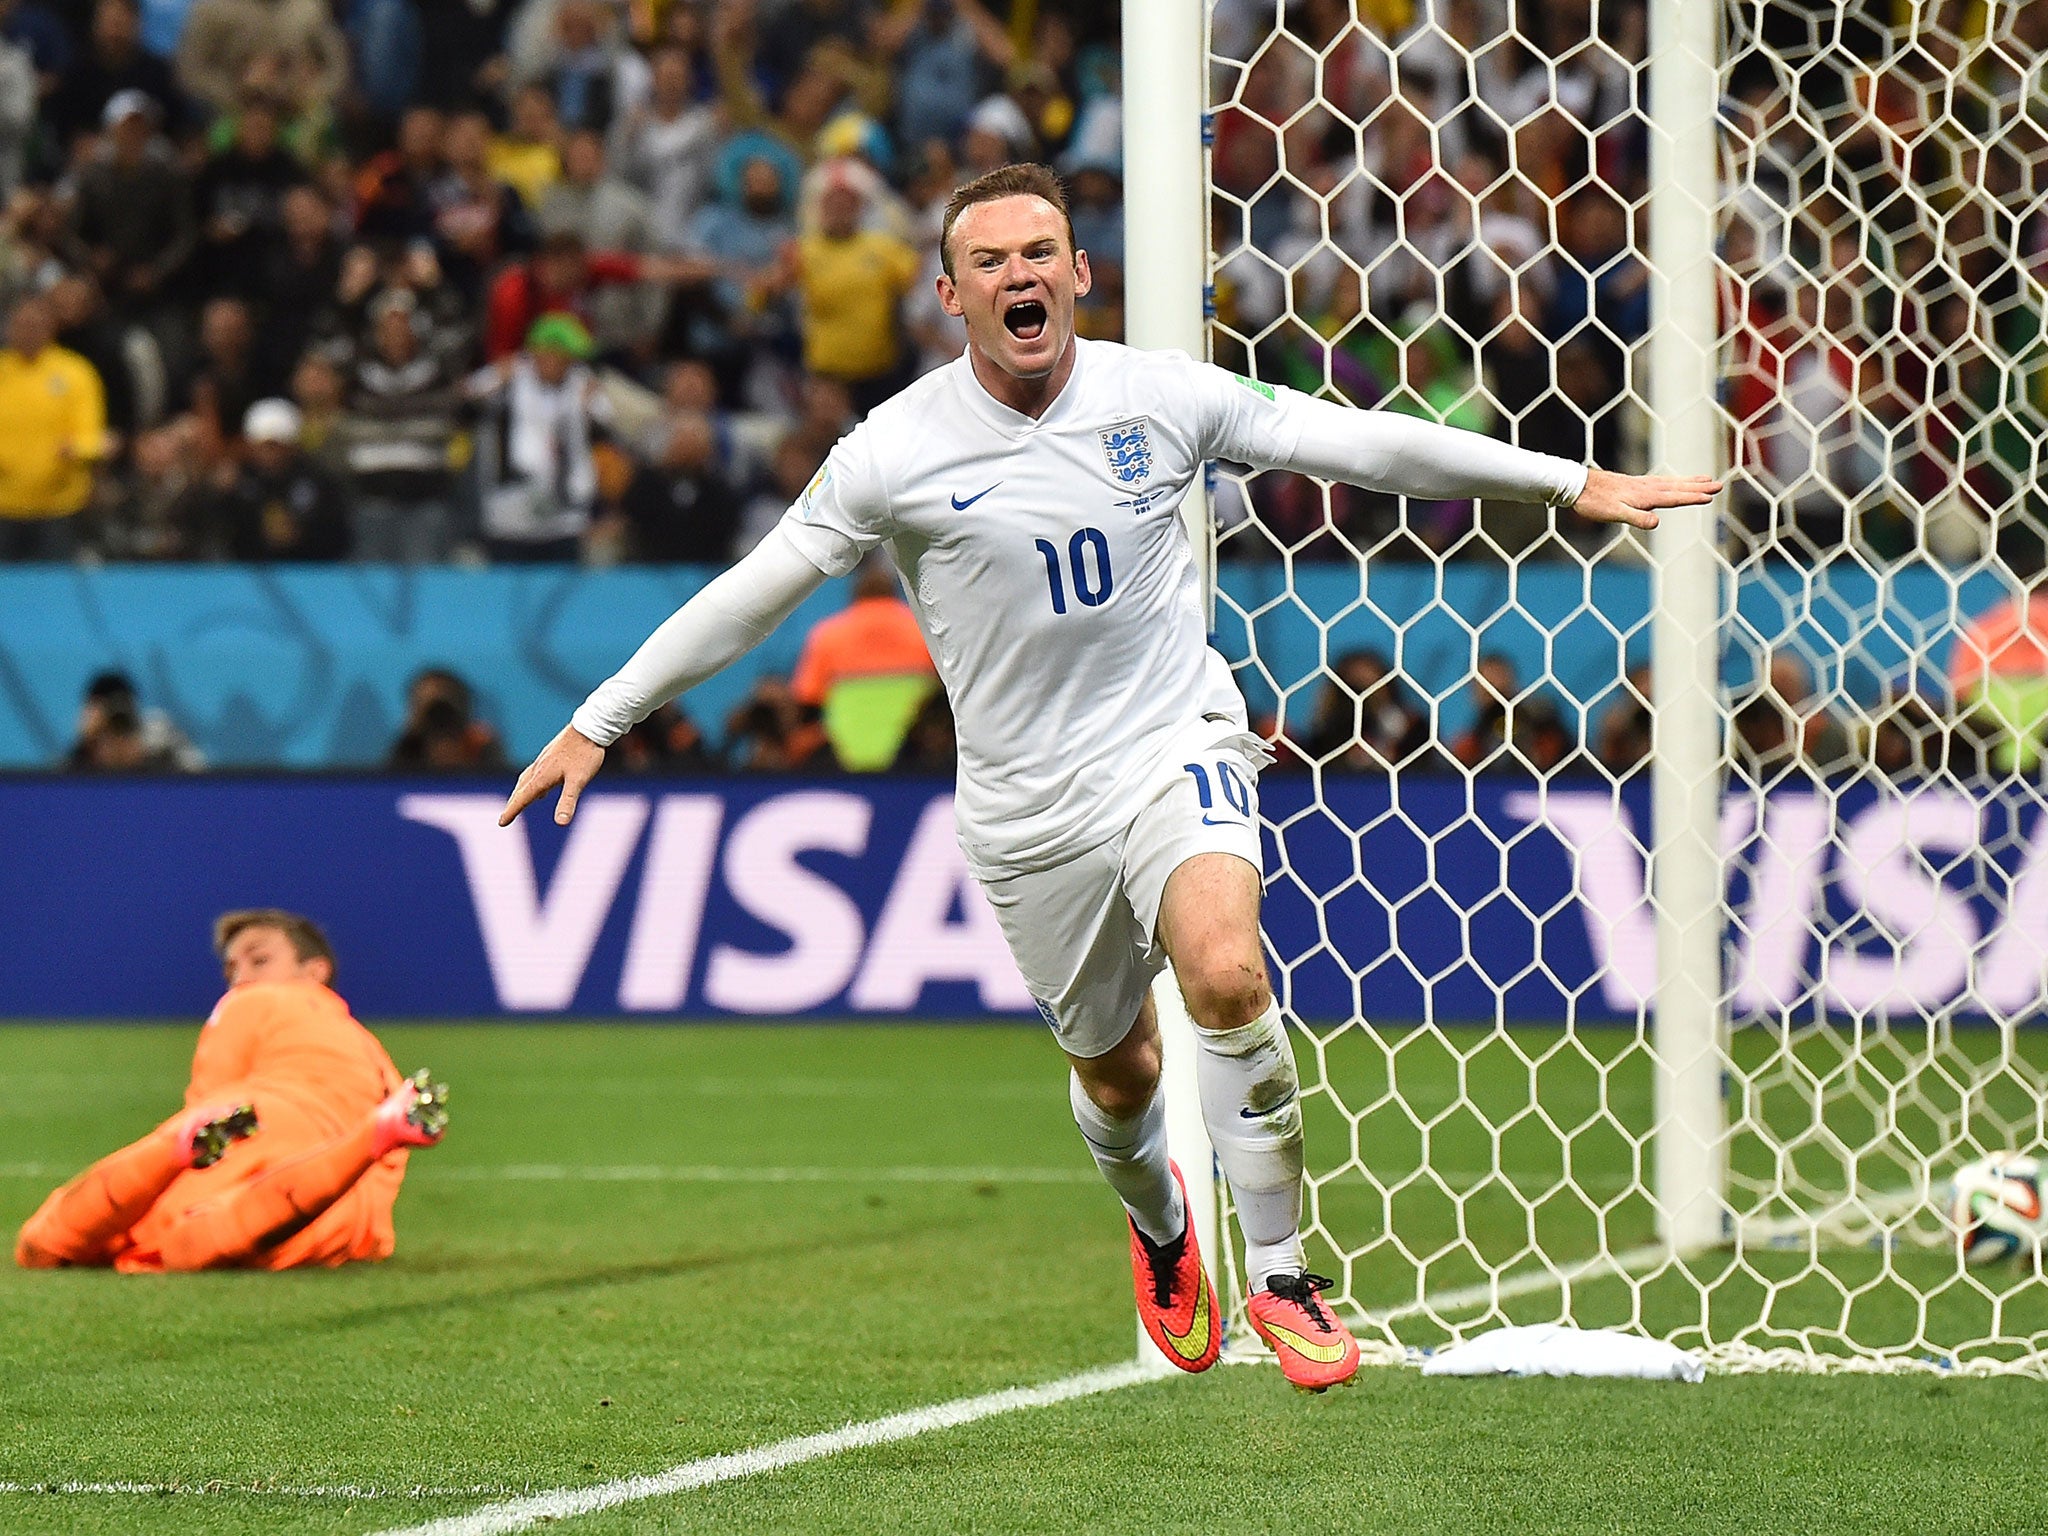 Wayne Rooney equalises for England